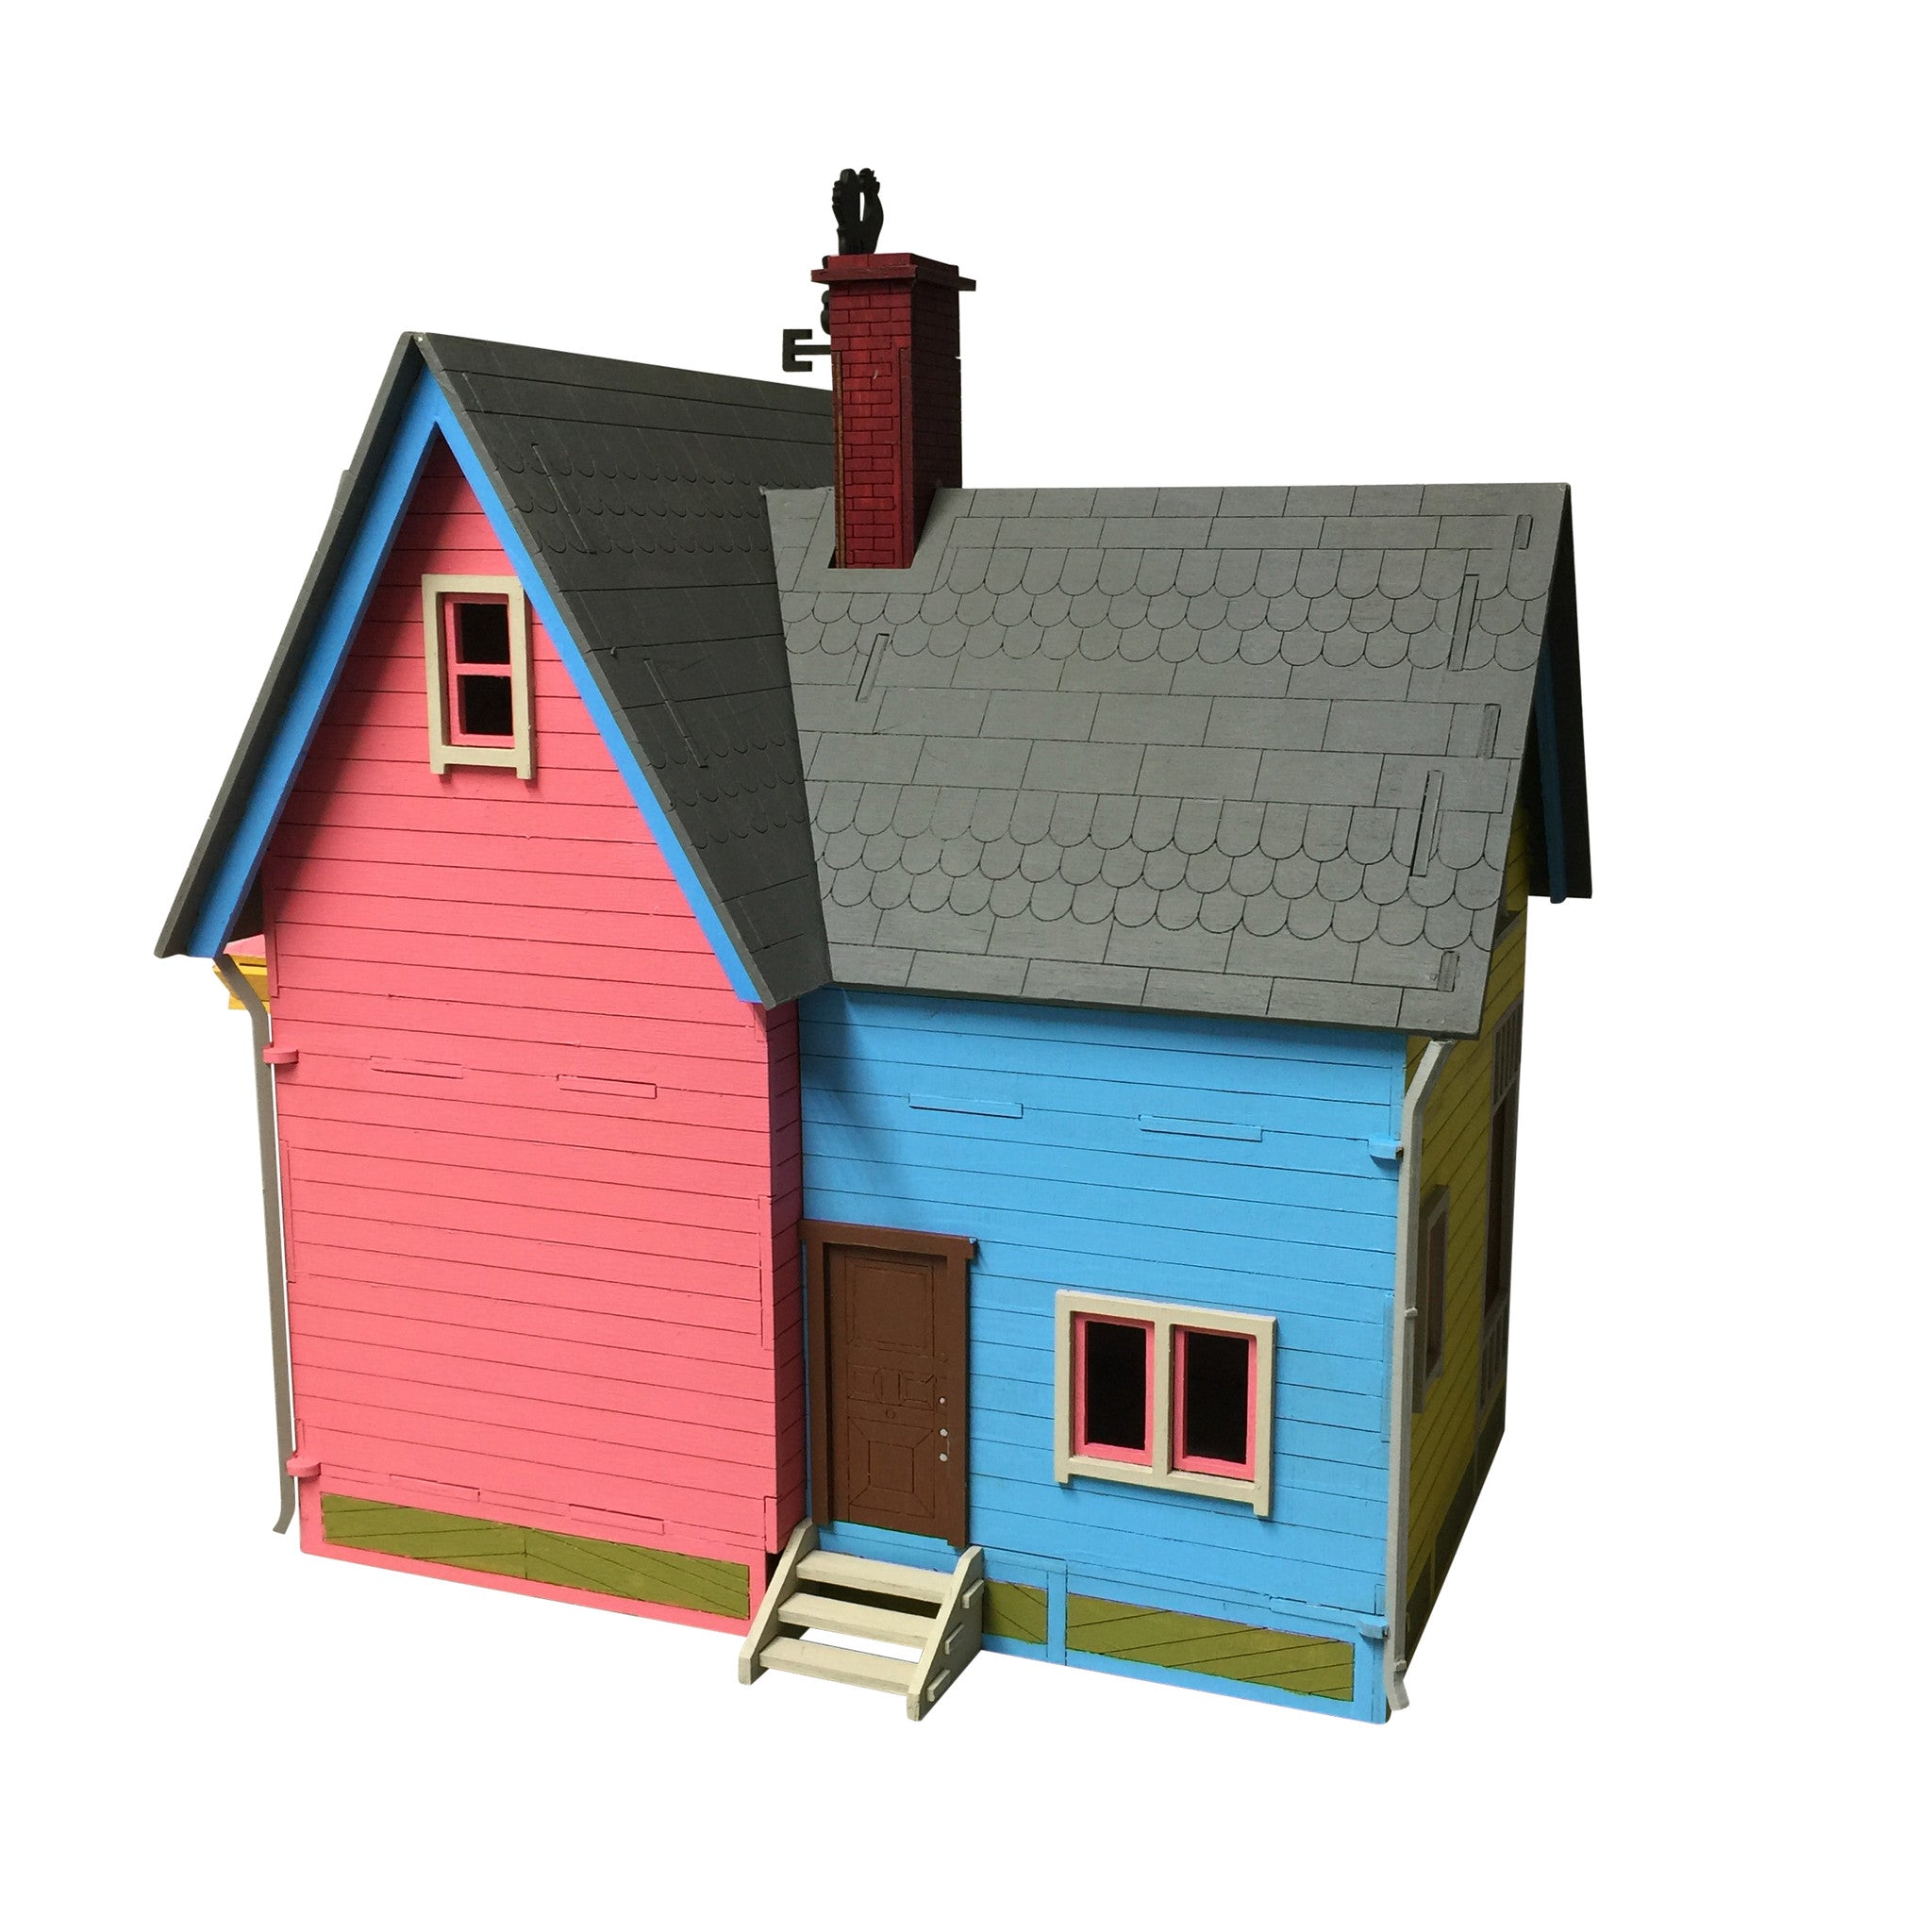 New Version UP House Model Painted/Assembled - BirdsWoodShack